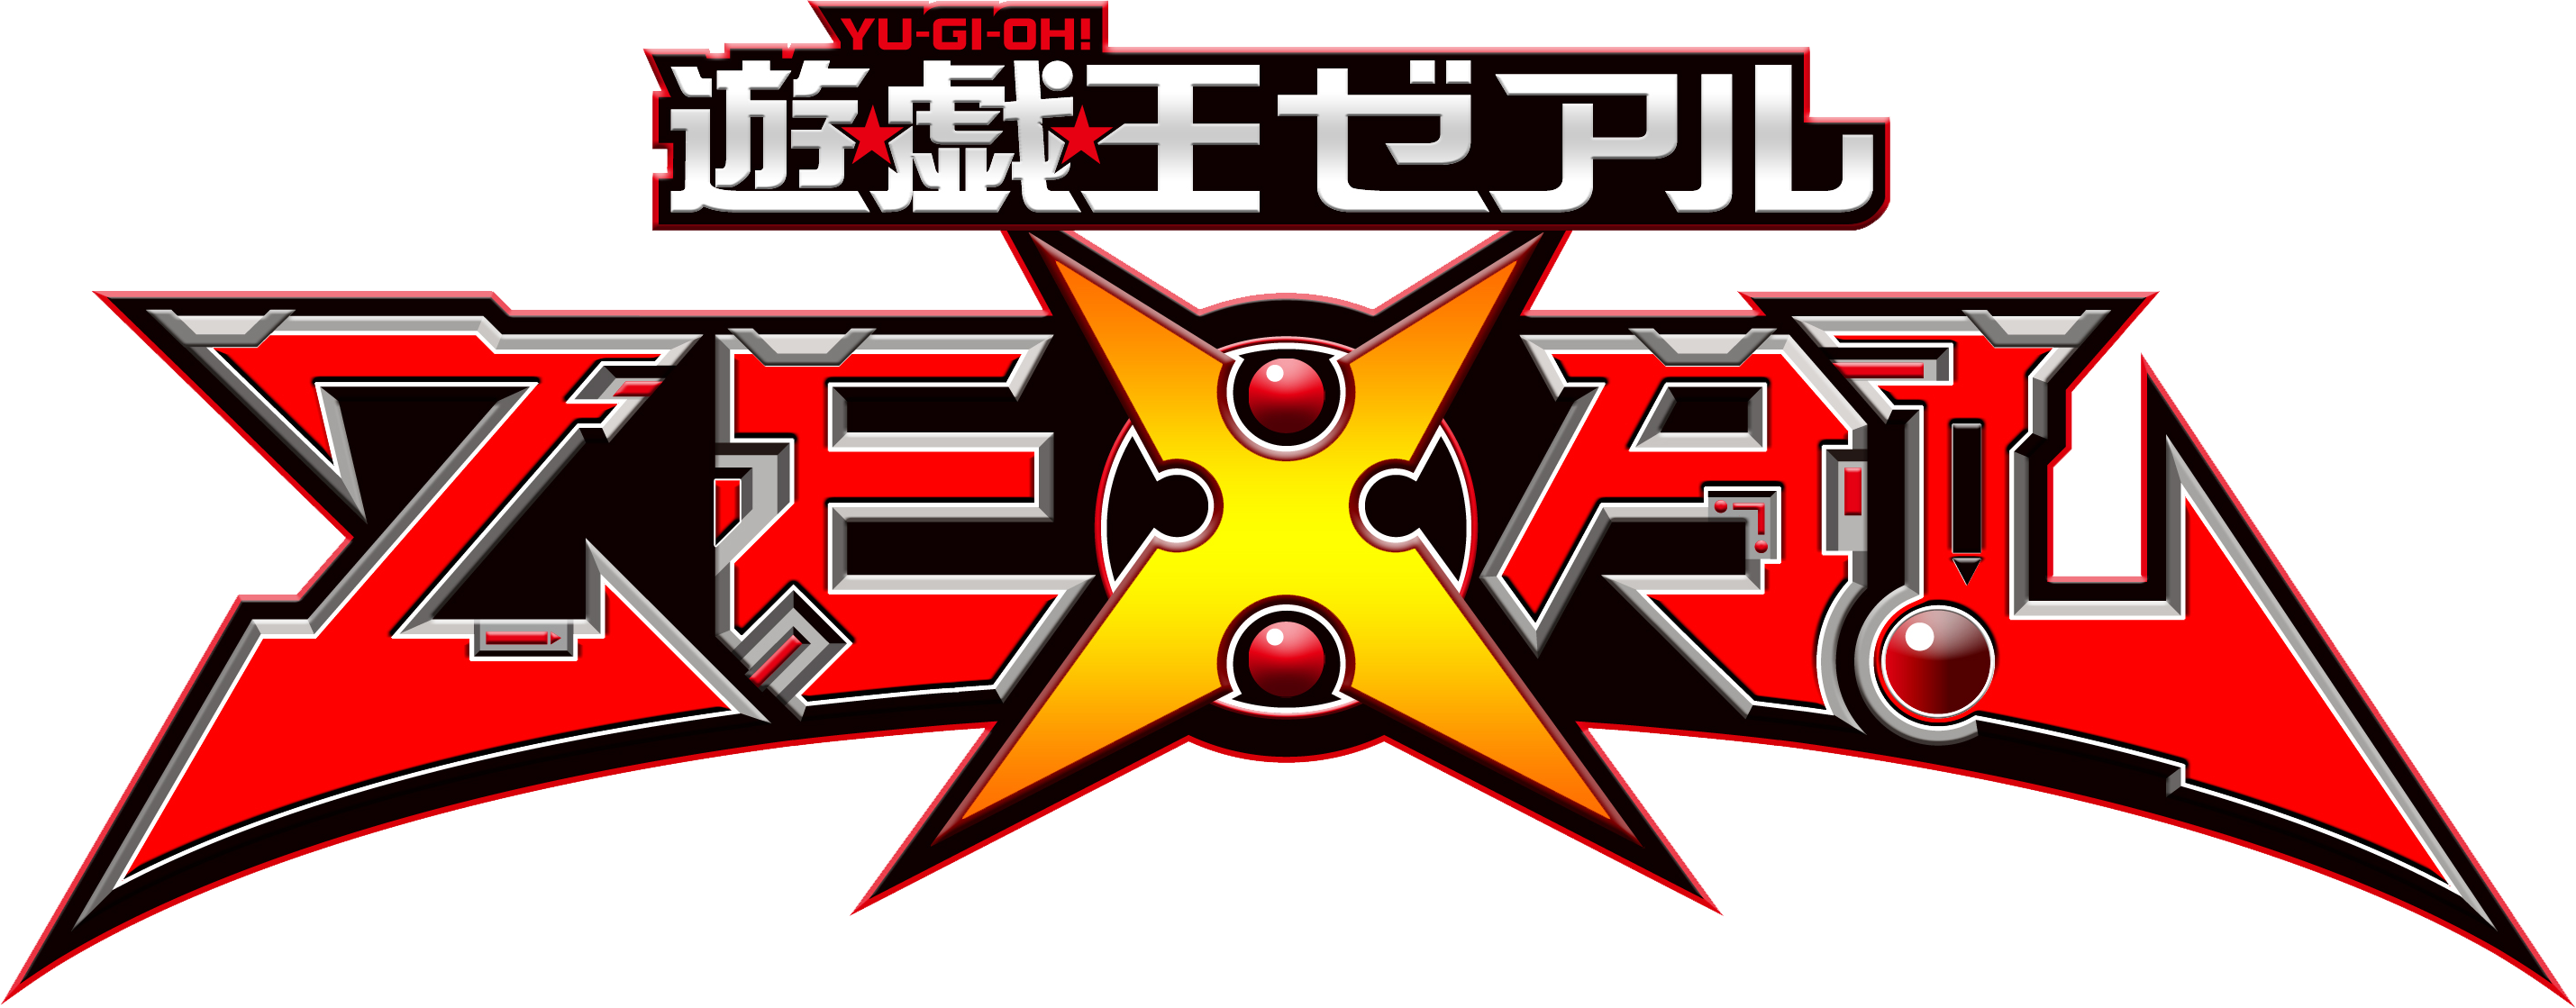 Yu-Gi-Oh! Zexal II (season 1) - Wikipedia